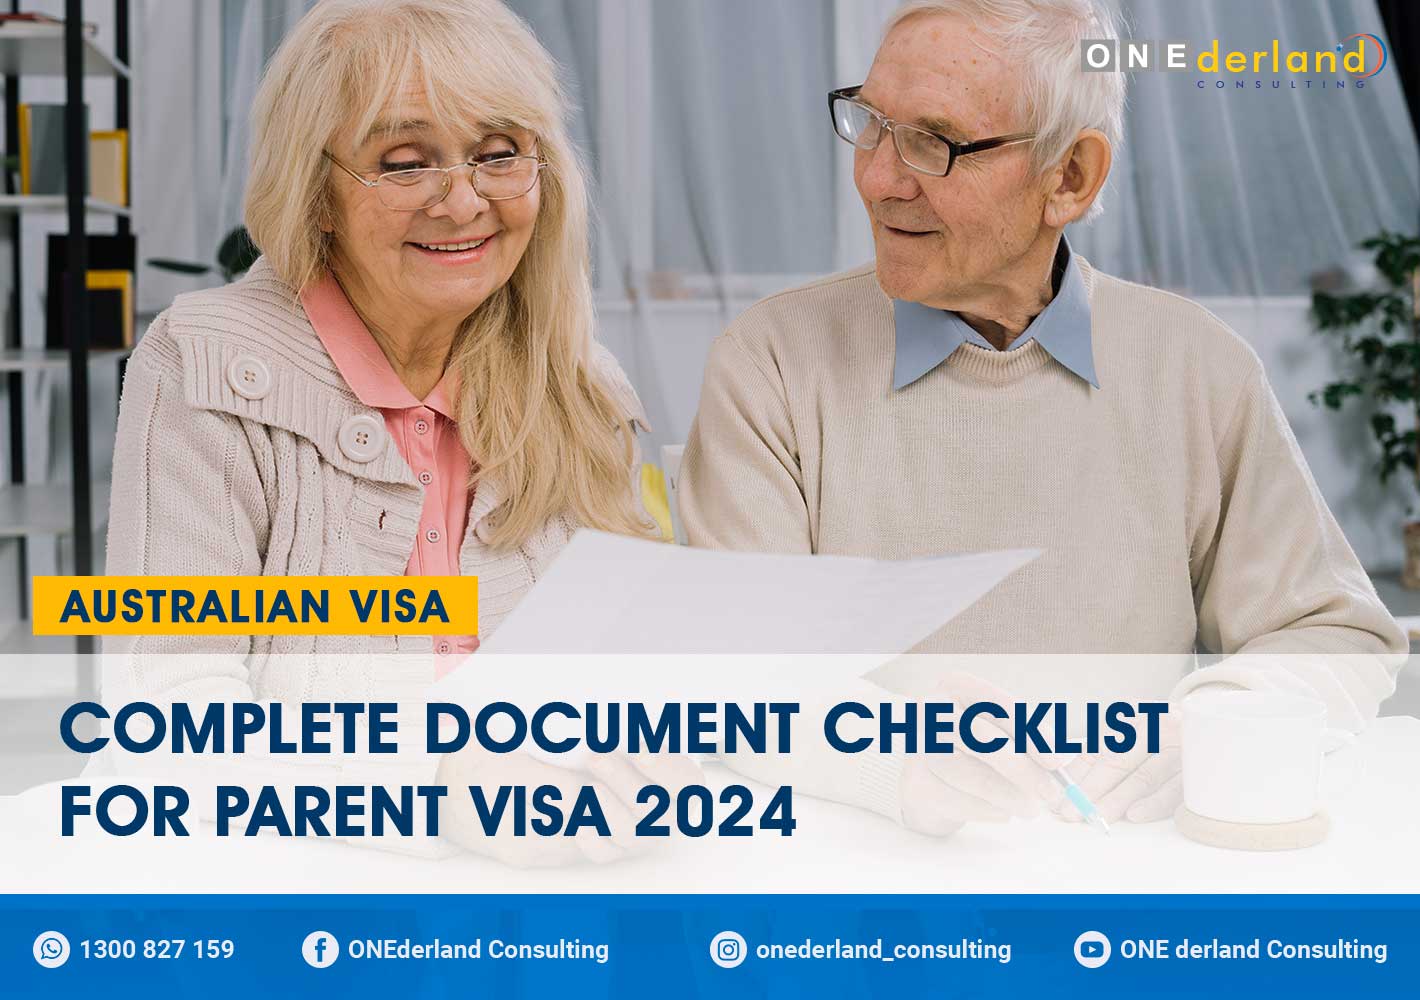 Complete Document Checklist for Parent Visa Application in 2024